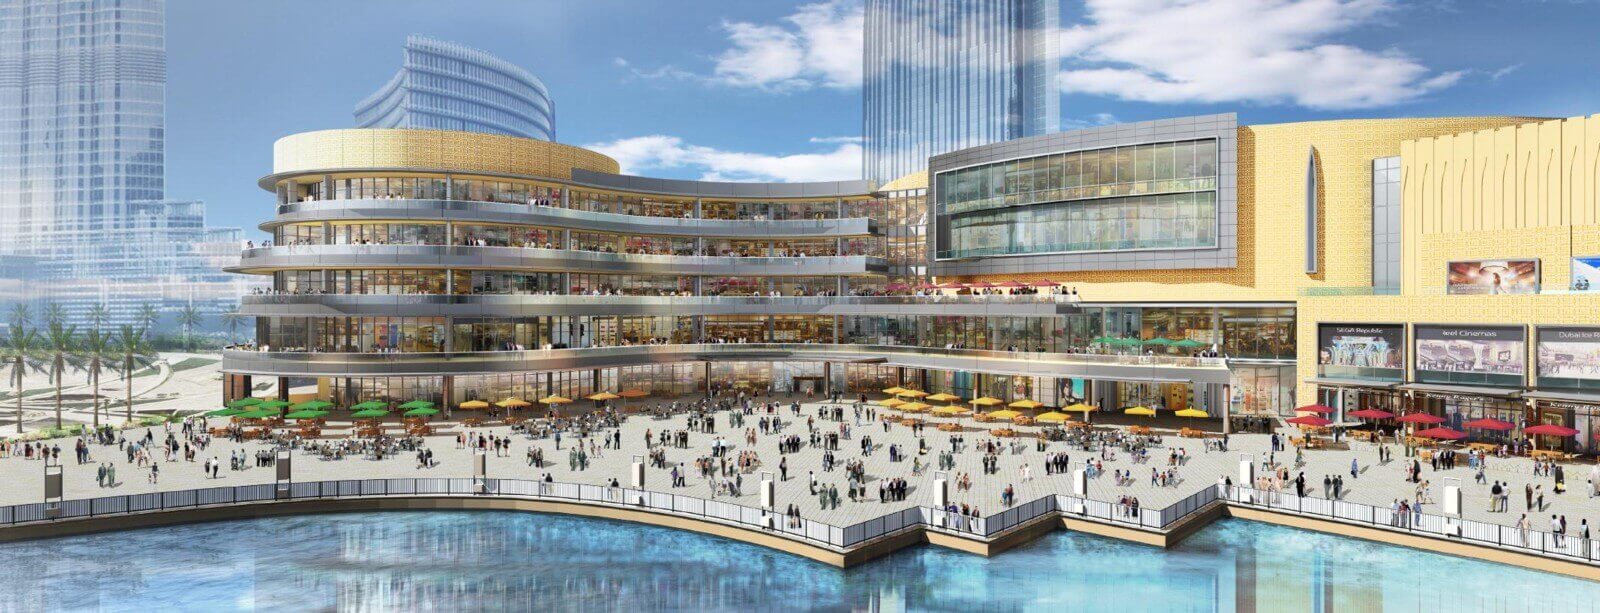 Dubai Mall Expansion